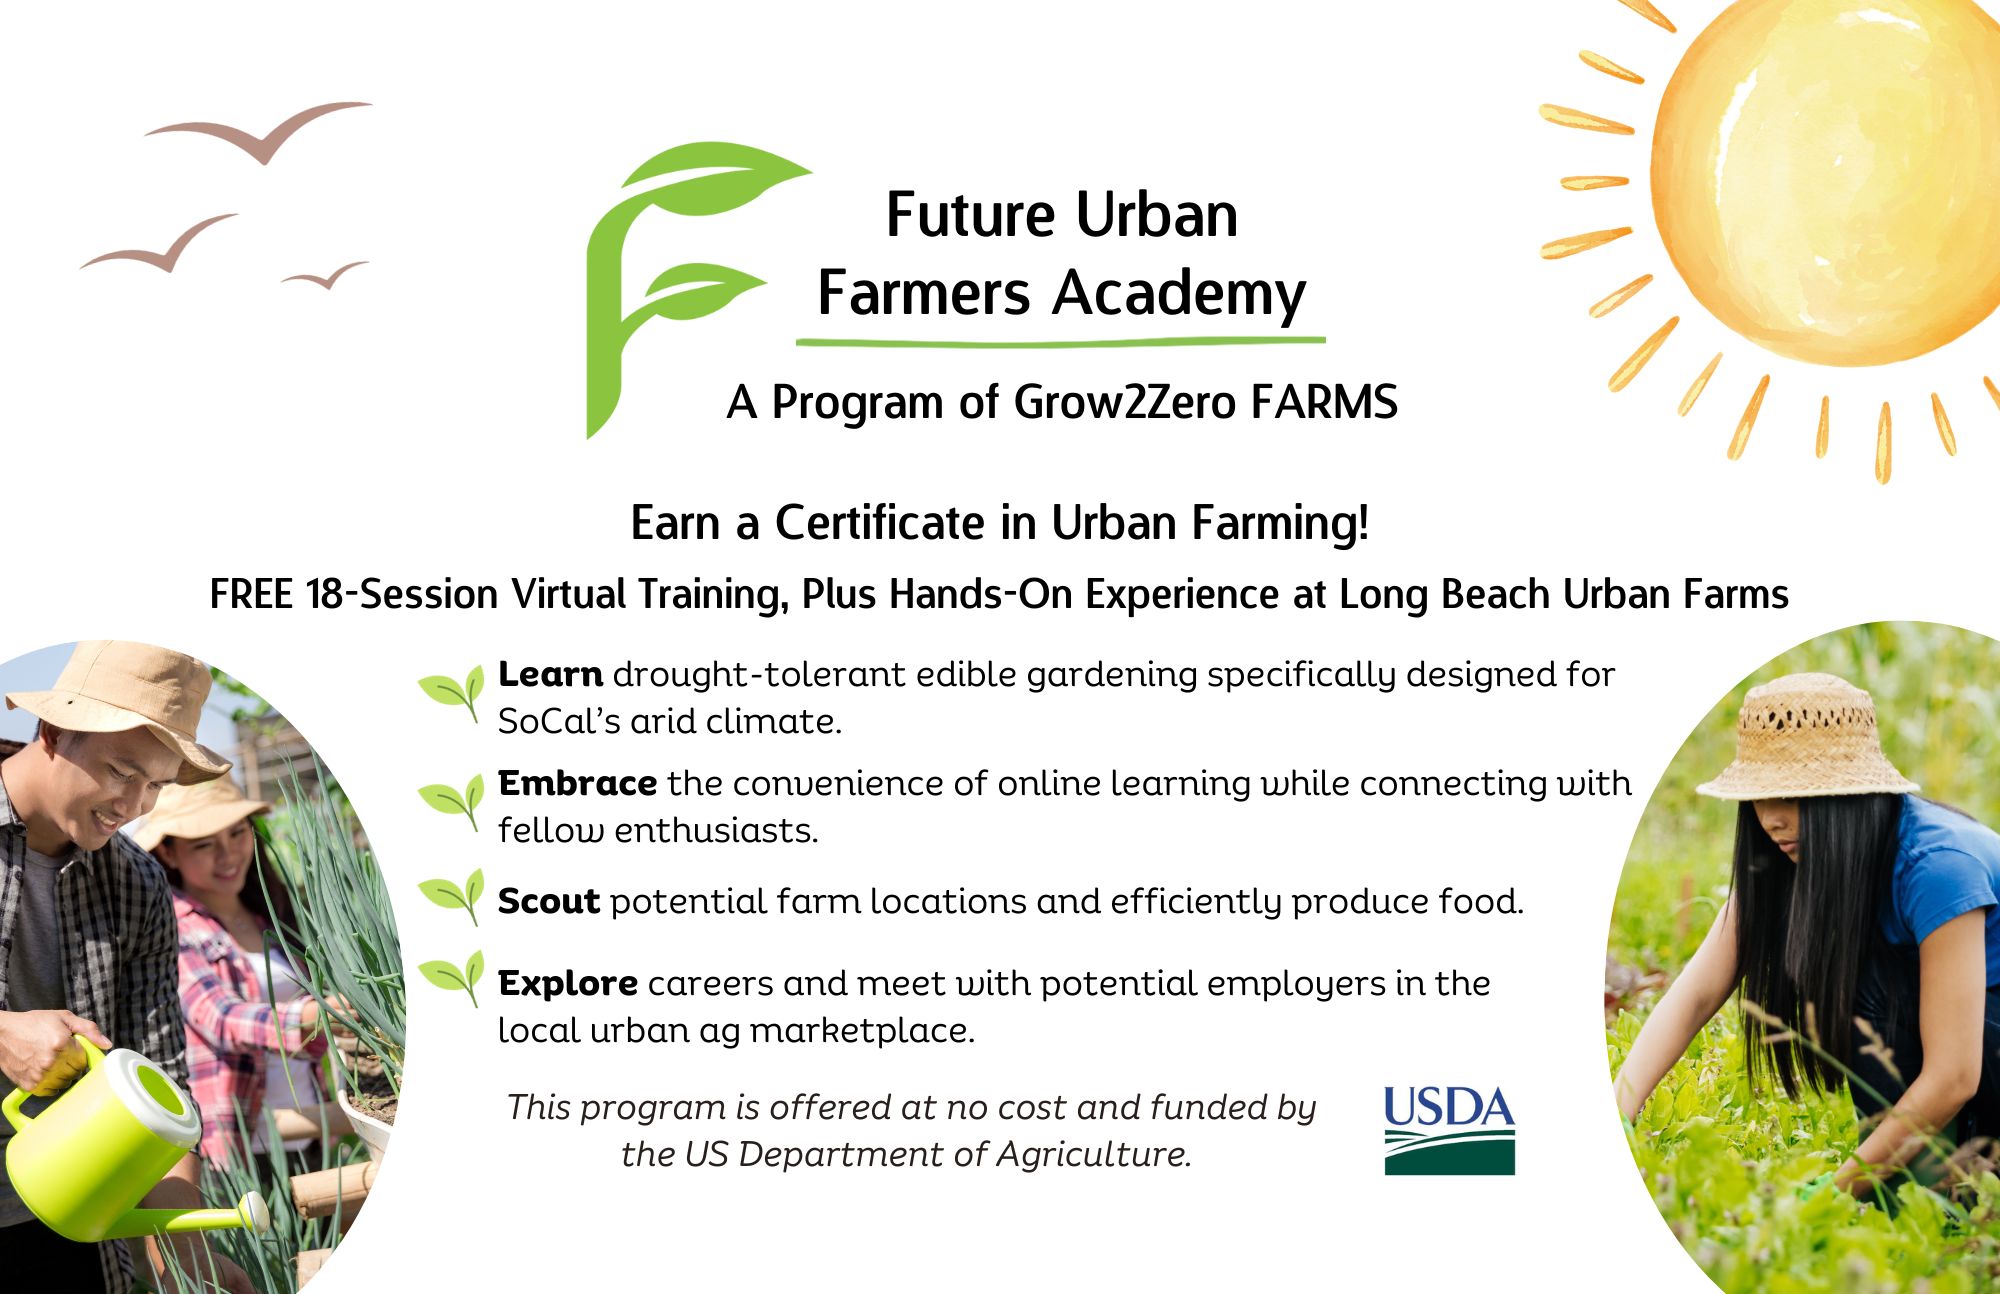 Future Urban Farmers Academy - Earn a Certificate in Urban Farming!